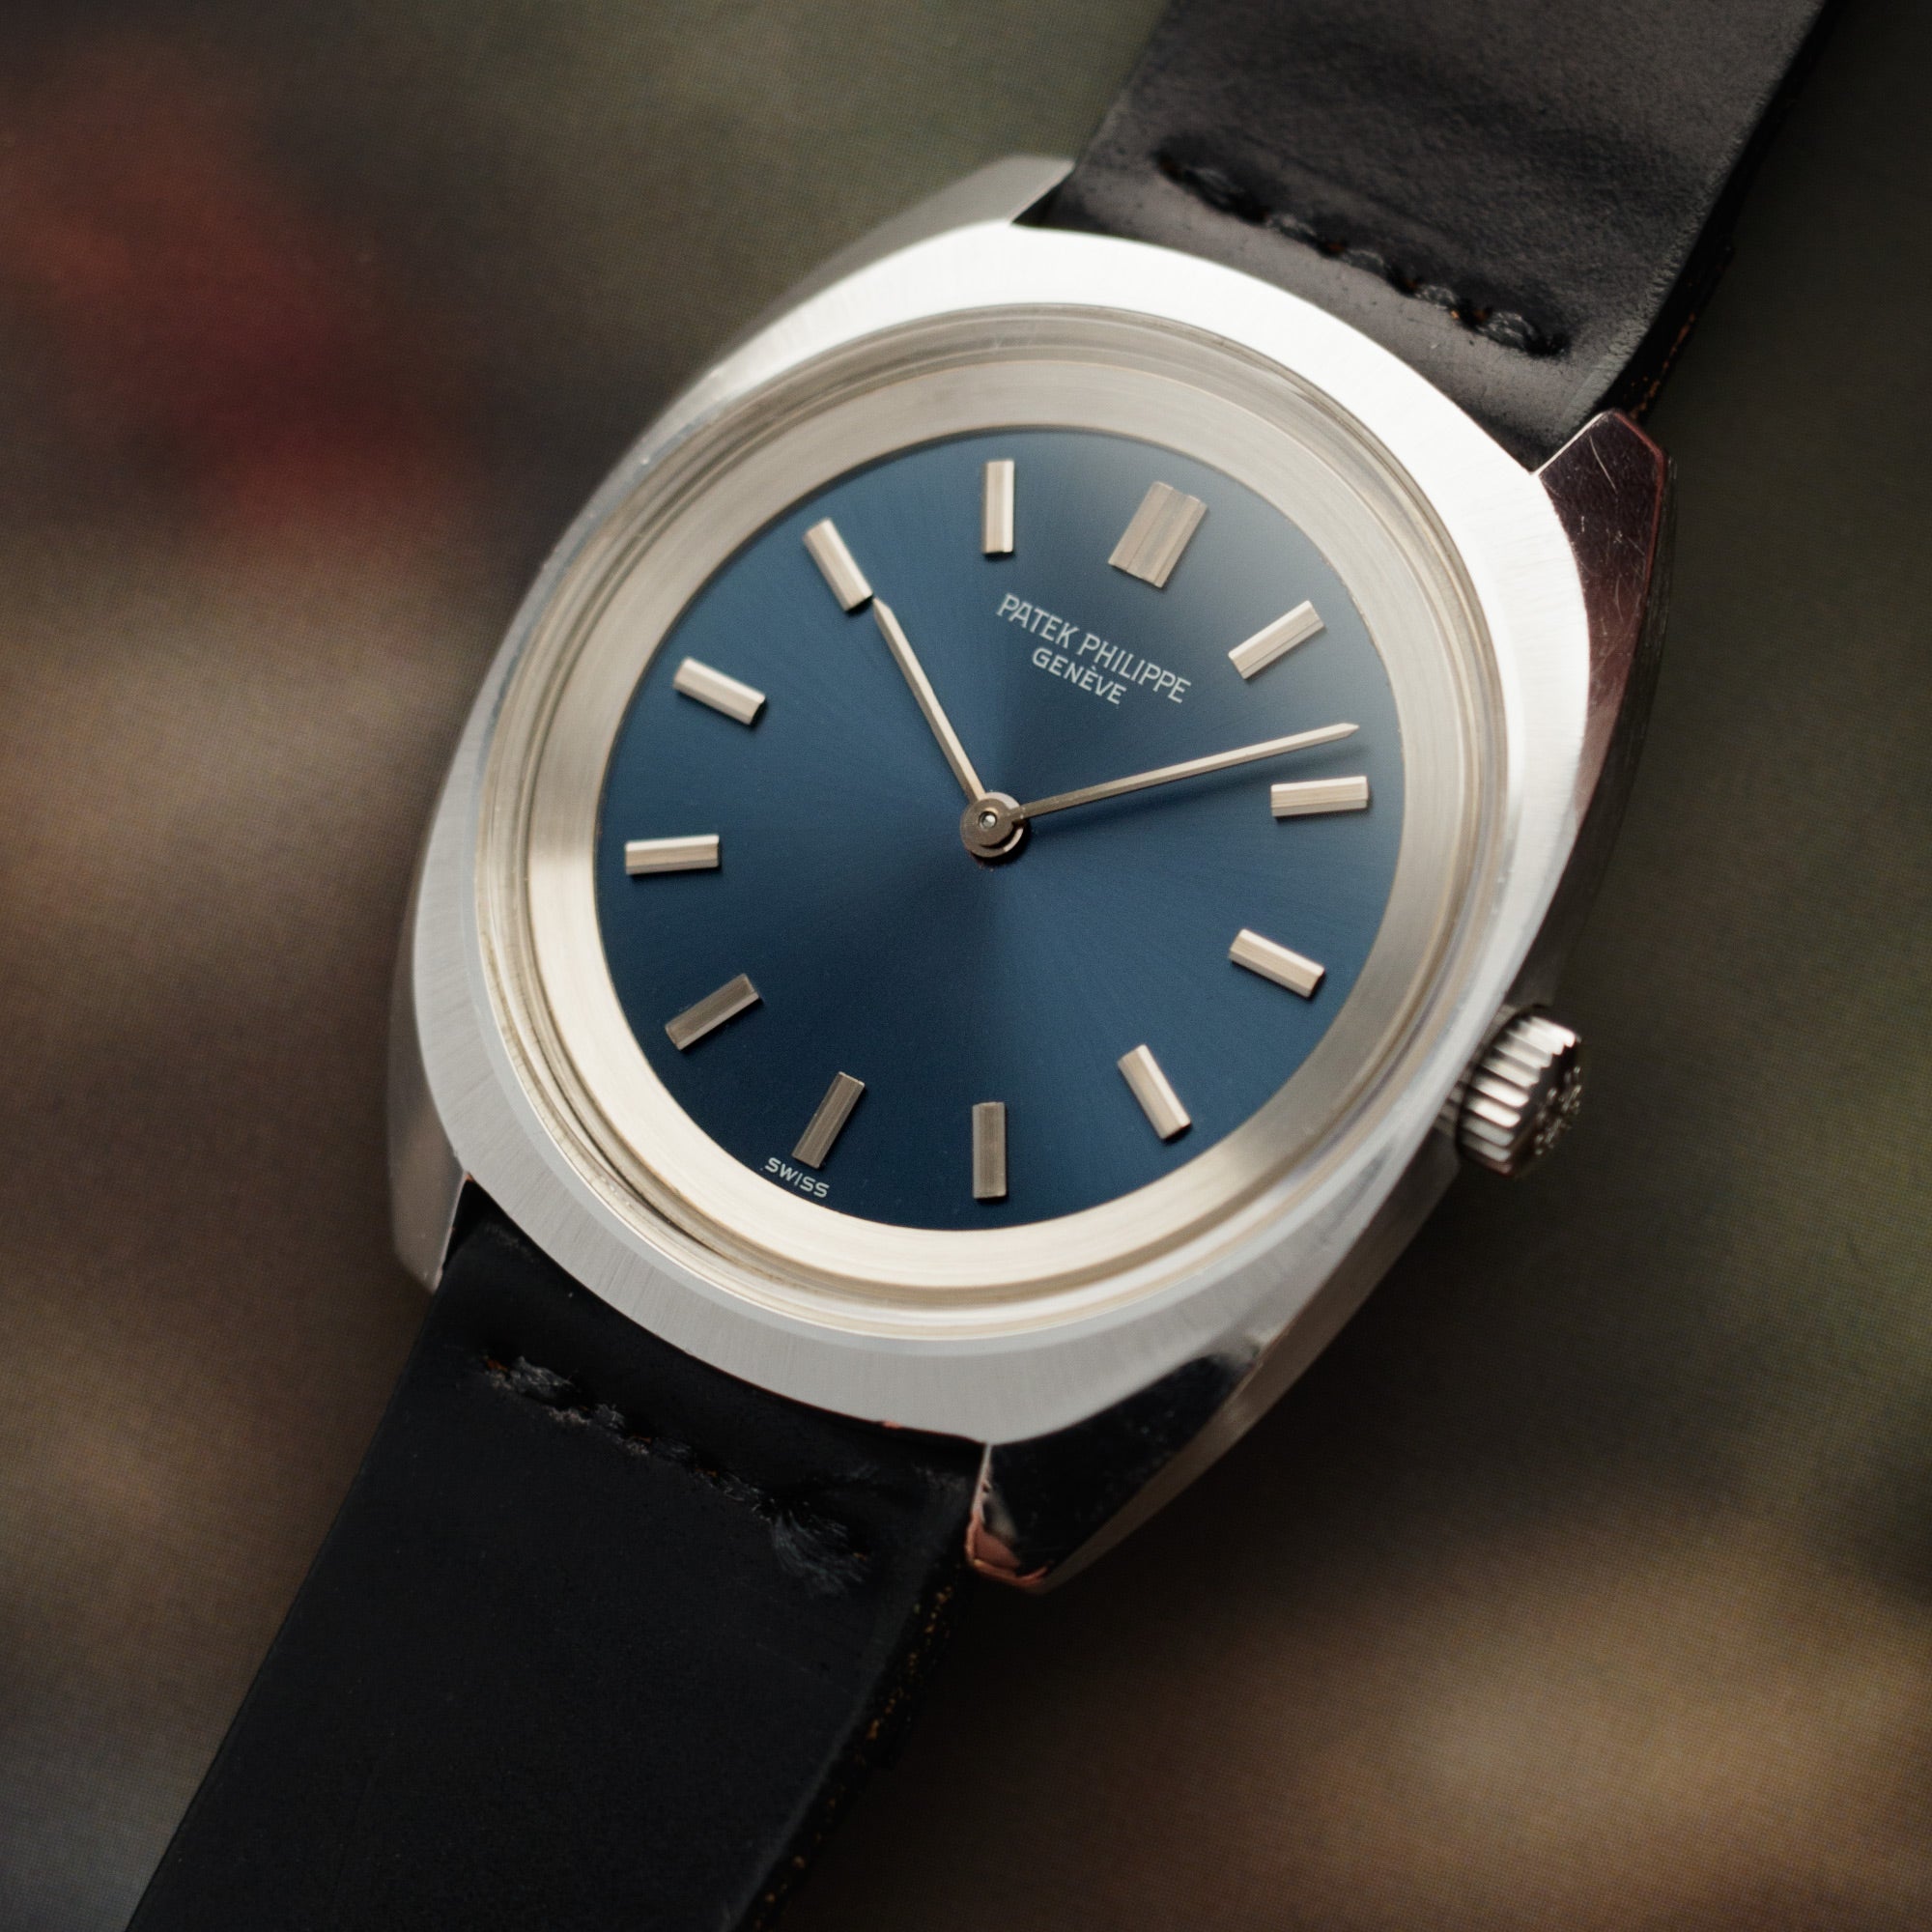 Patek Philippe - Patek Philippe Steel Tonneau Ref. 3579 with Original Papers - The Keystone Watches